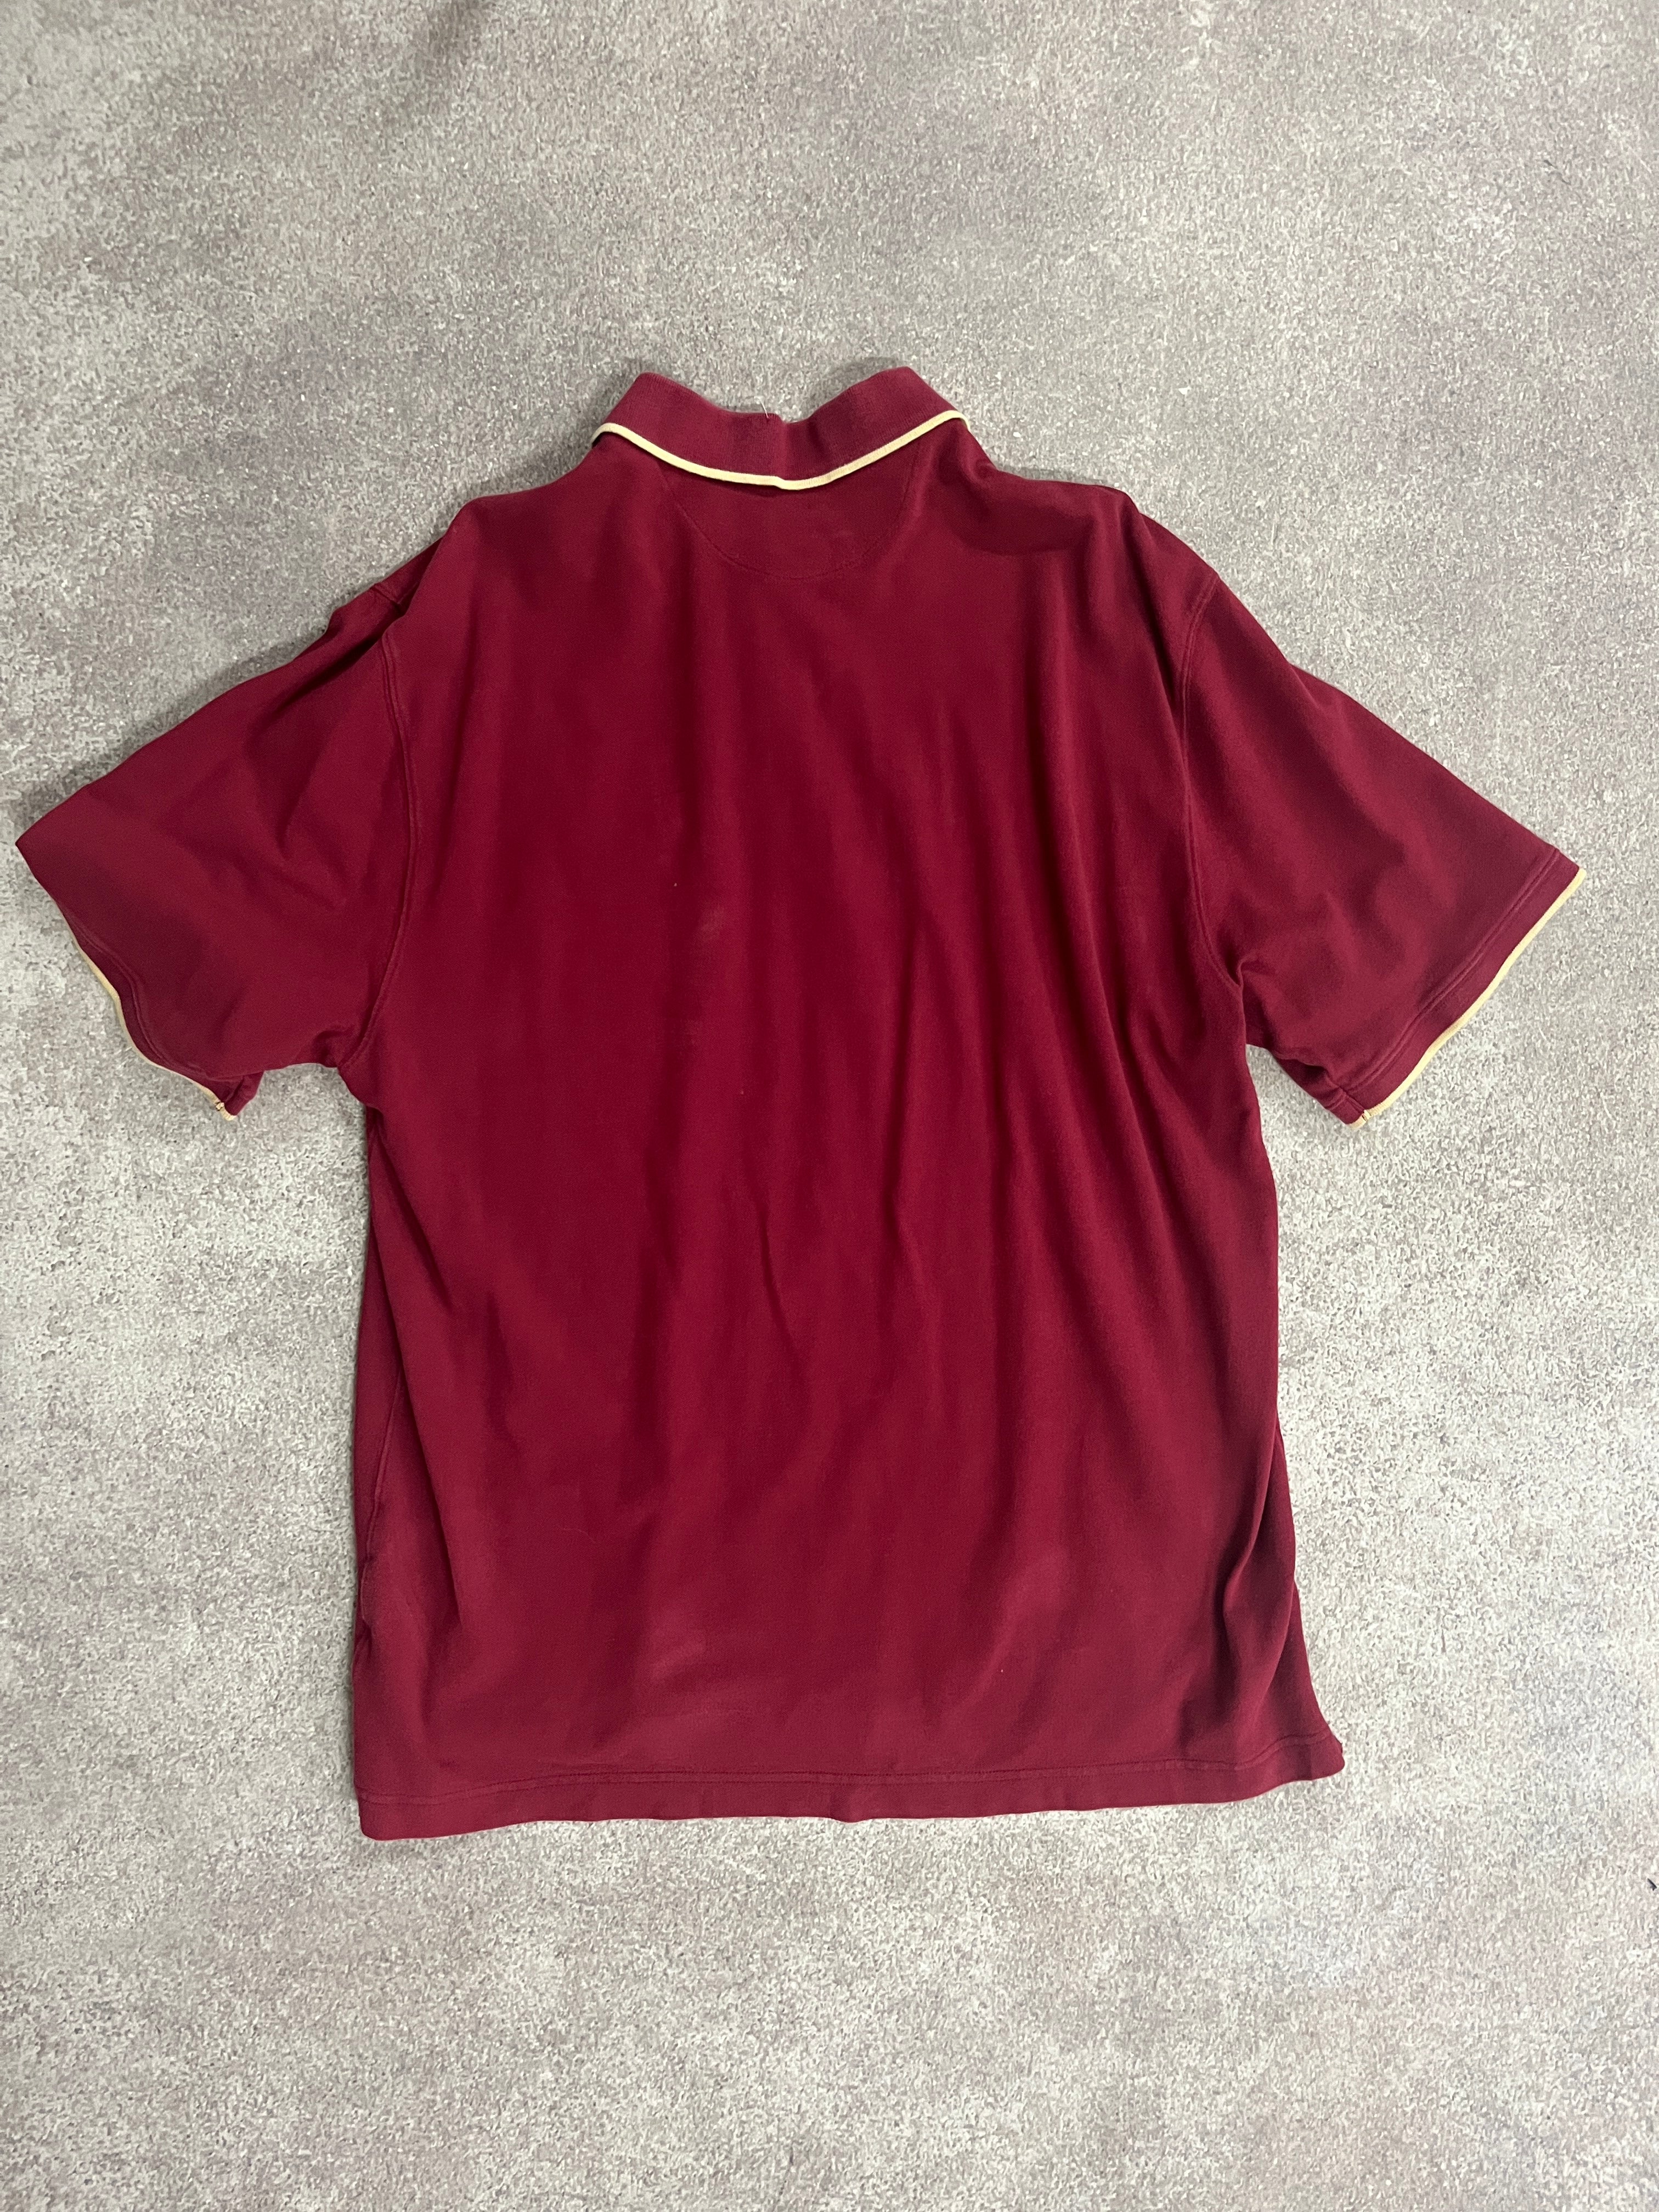 Vintage Nike Jersey TShirt Red // Large - RHAGHOUSE VINTAGE